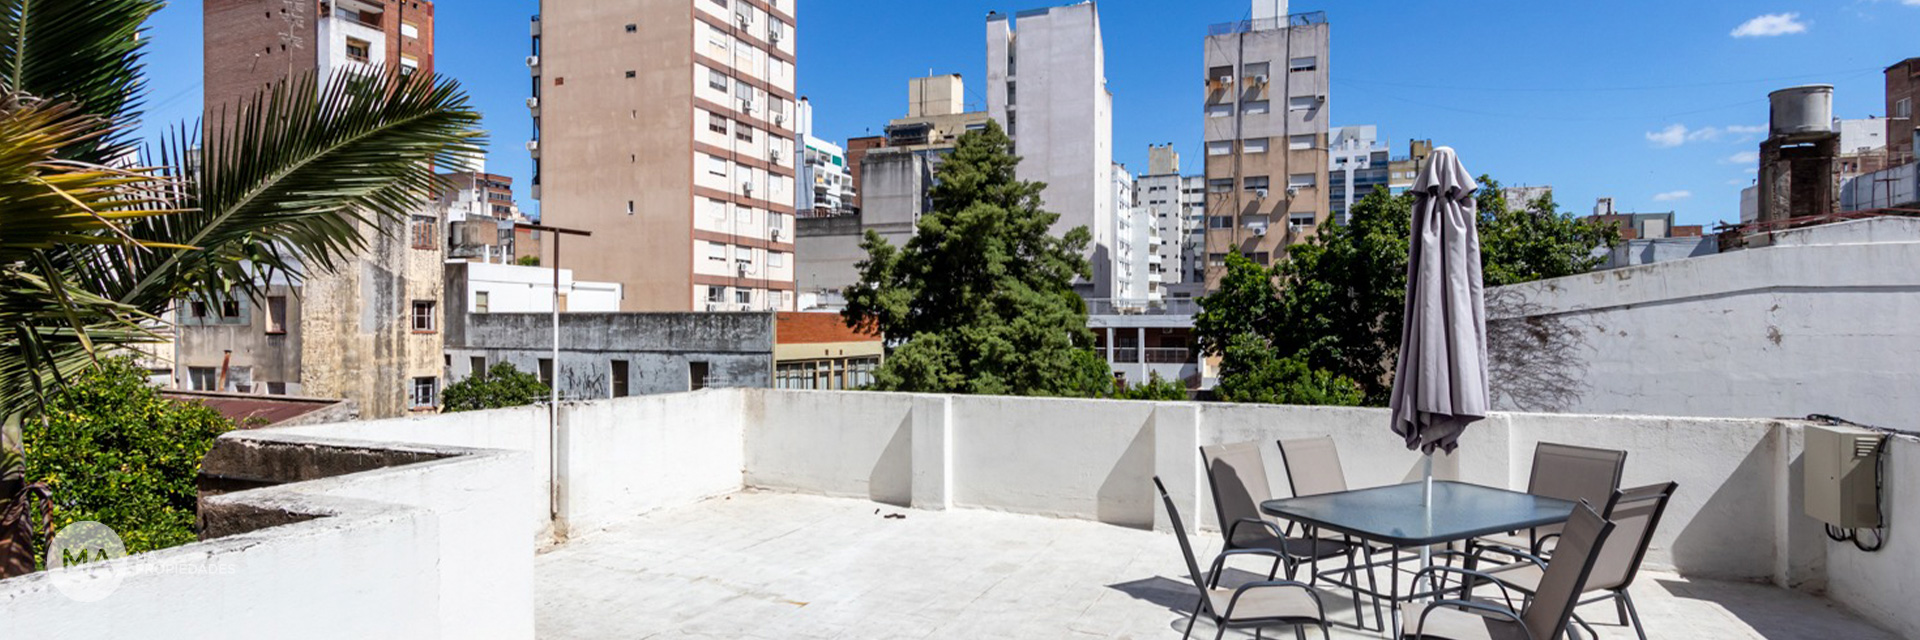 Departamento 2 dormitorios con terraza exclusiva - Maipú 1500 - Barrio Martin | Venta